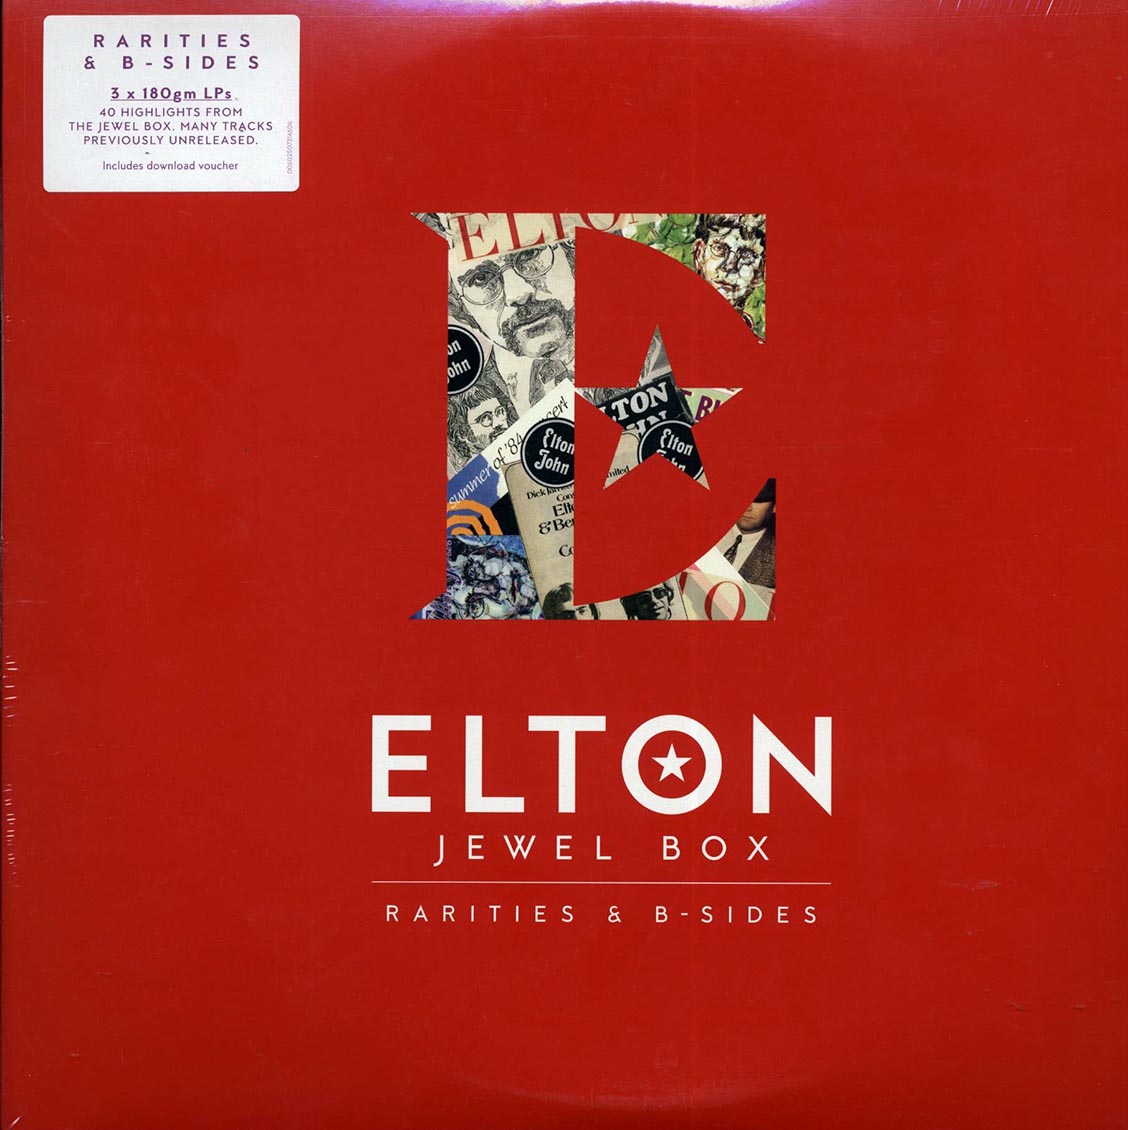 Elton John - Jewel Box: Rarities & B-Sides